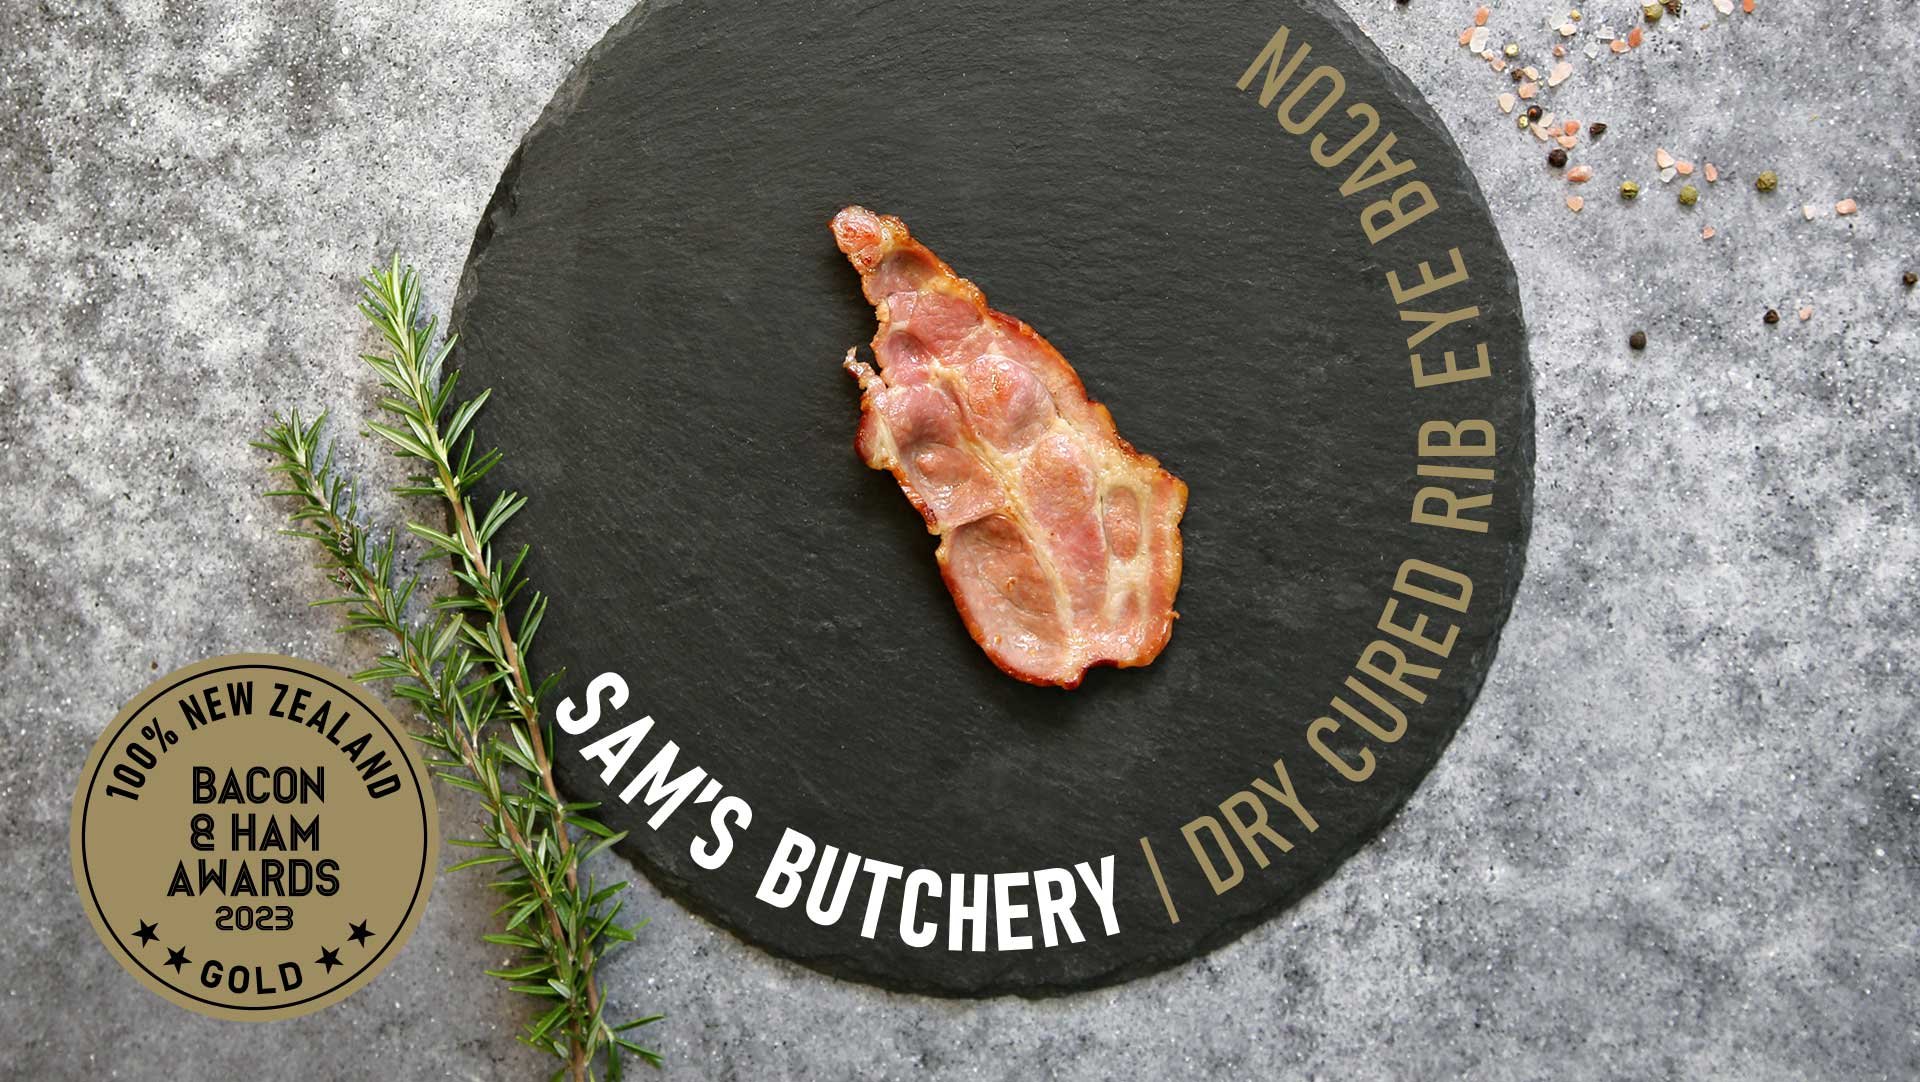 Sam's Butchery